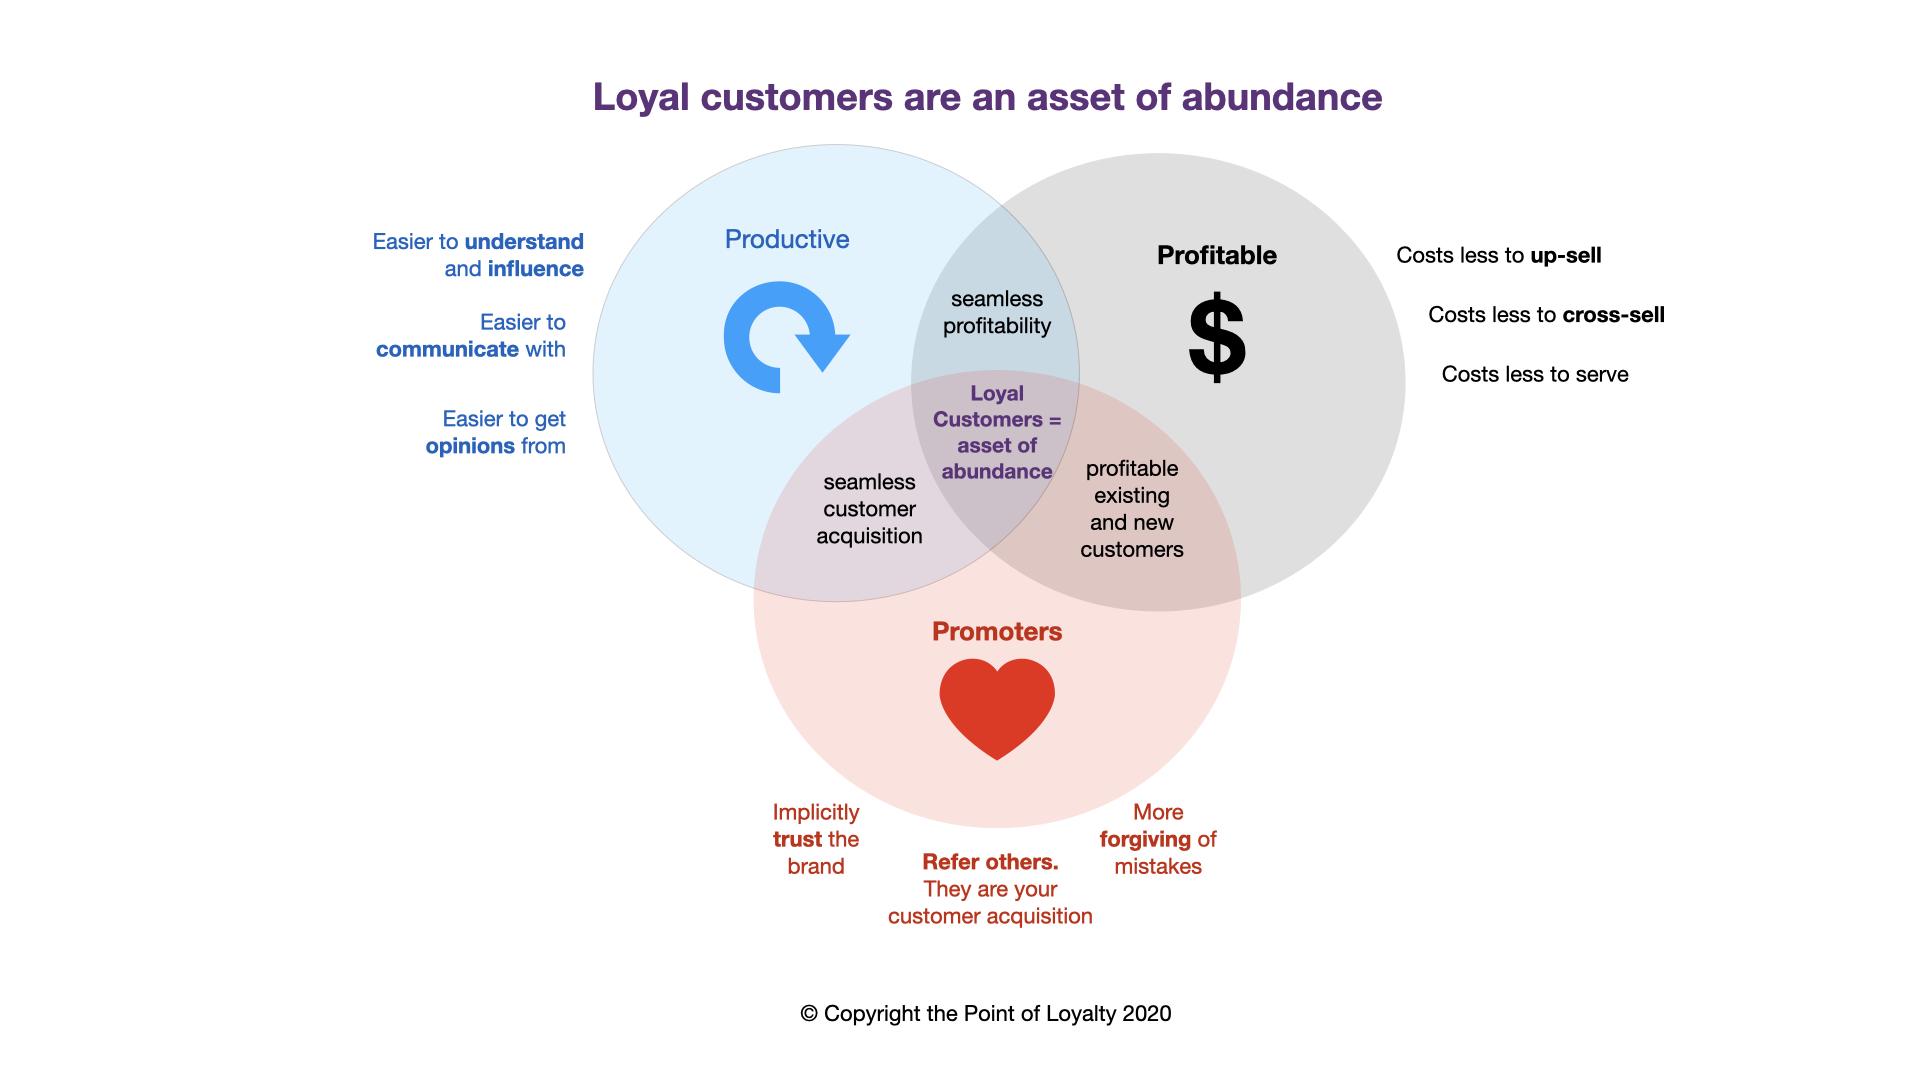 Loyal customers are an asset of abundance